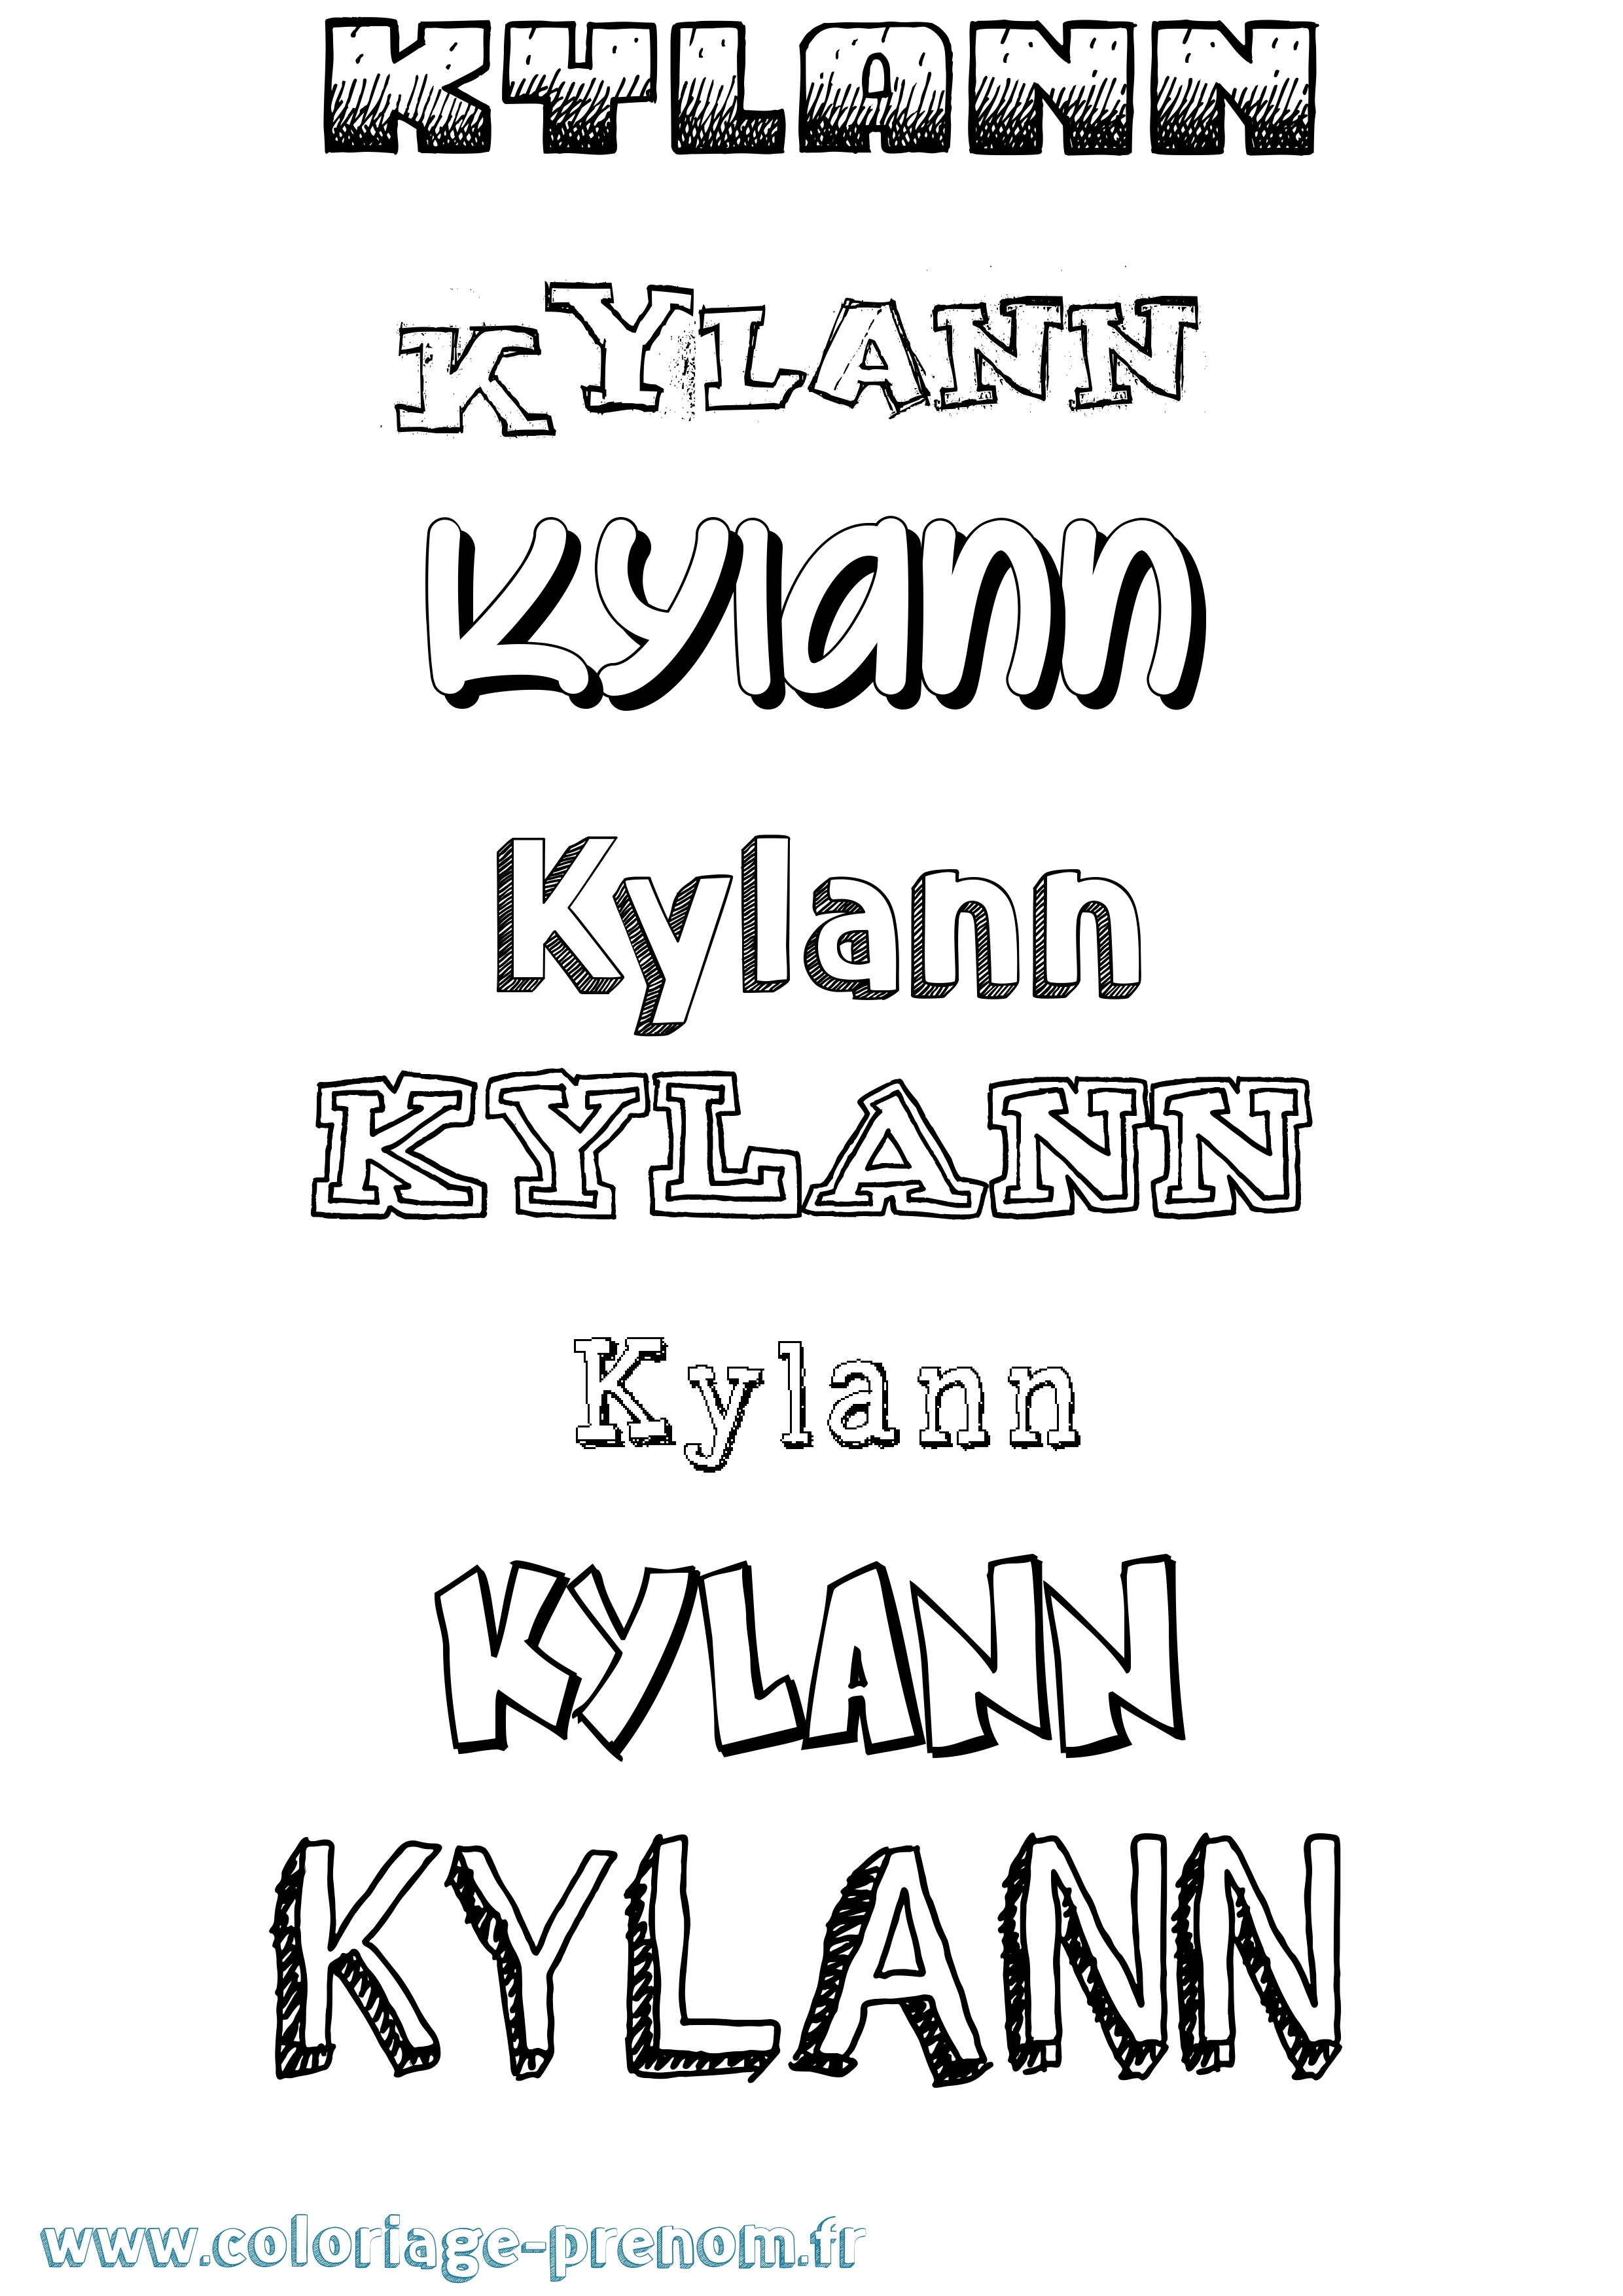 Coloriage prénom Kylann Dessiné